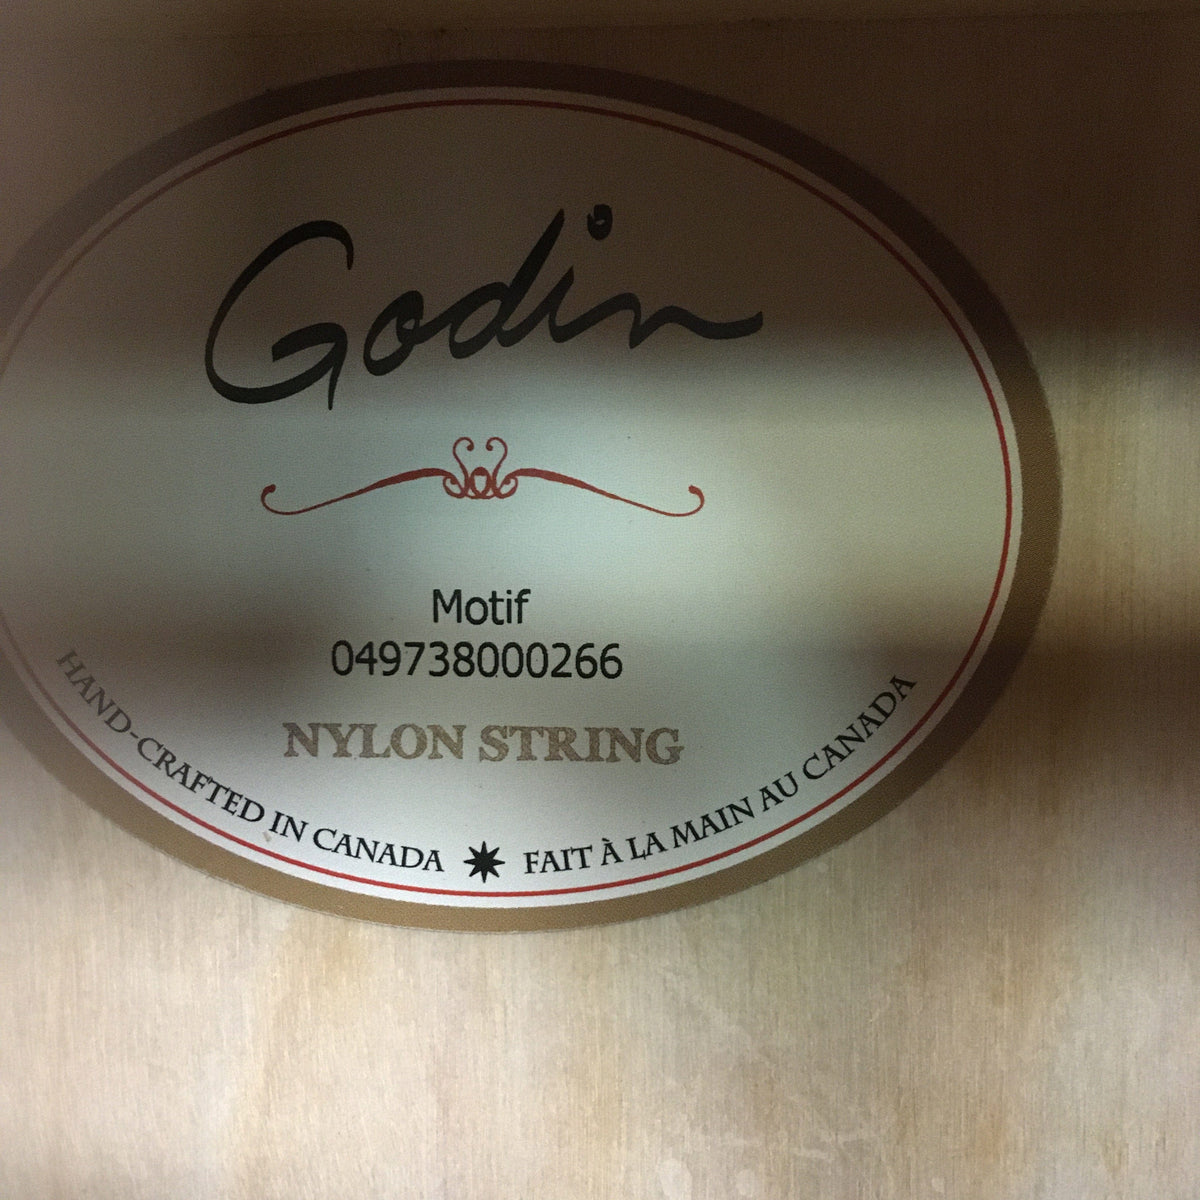 Godin Motif Nylon String Guitar Natural Guitars on Main